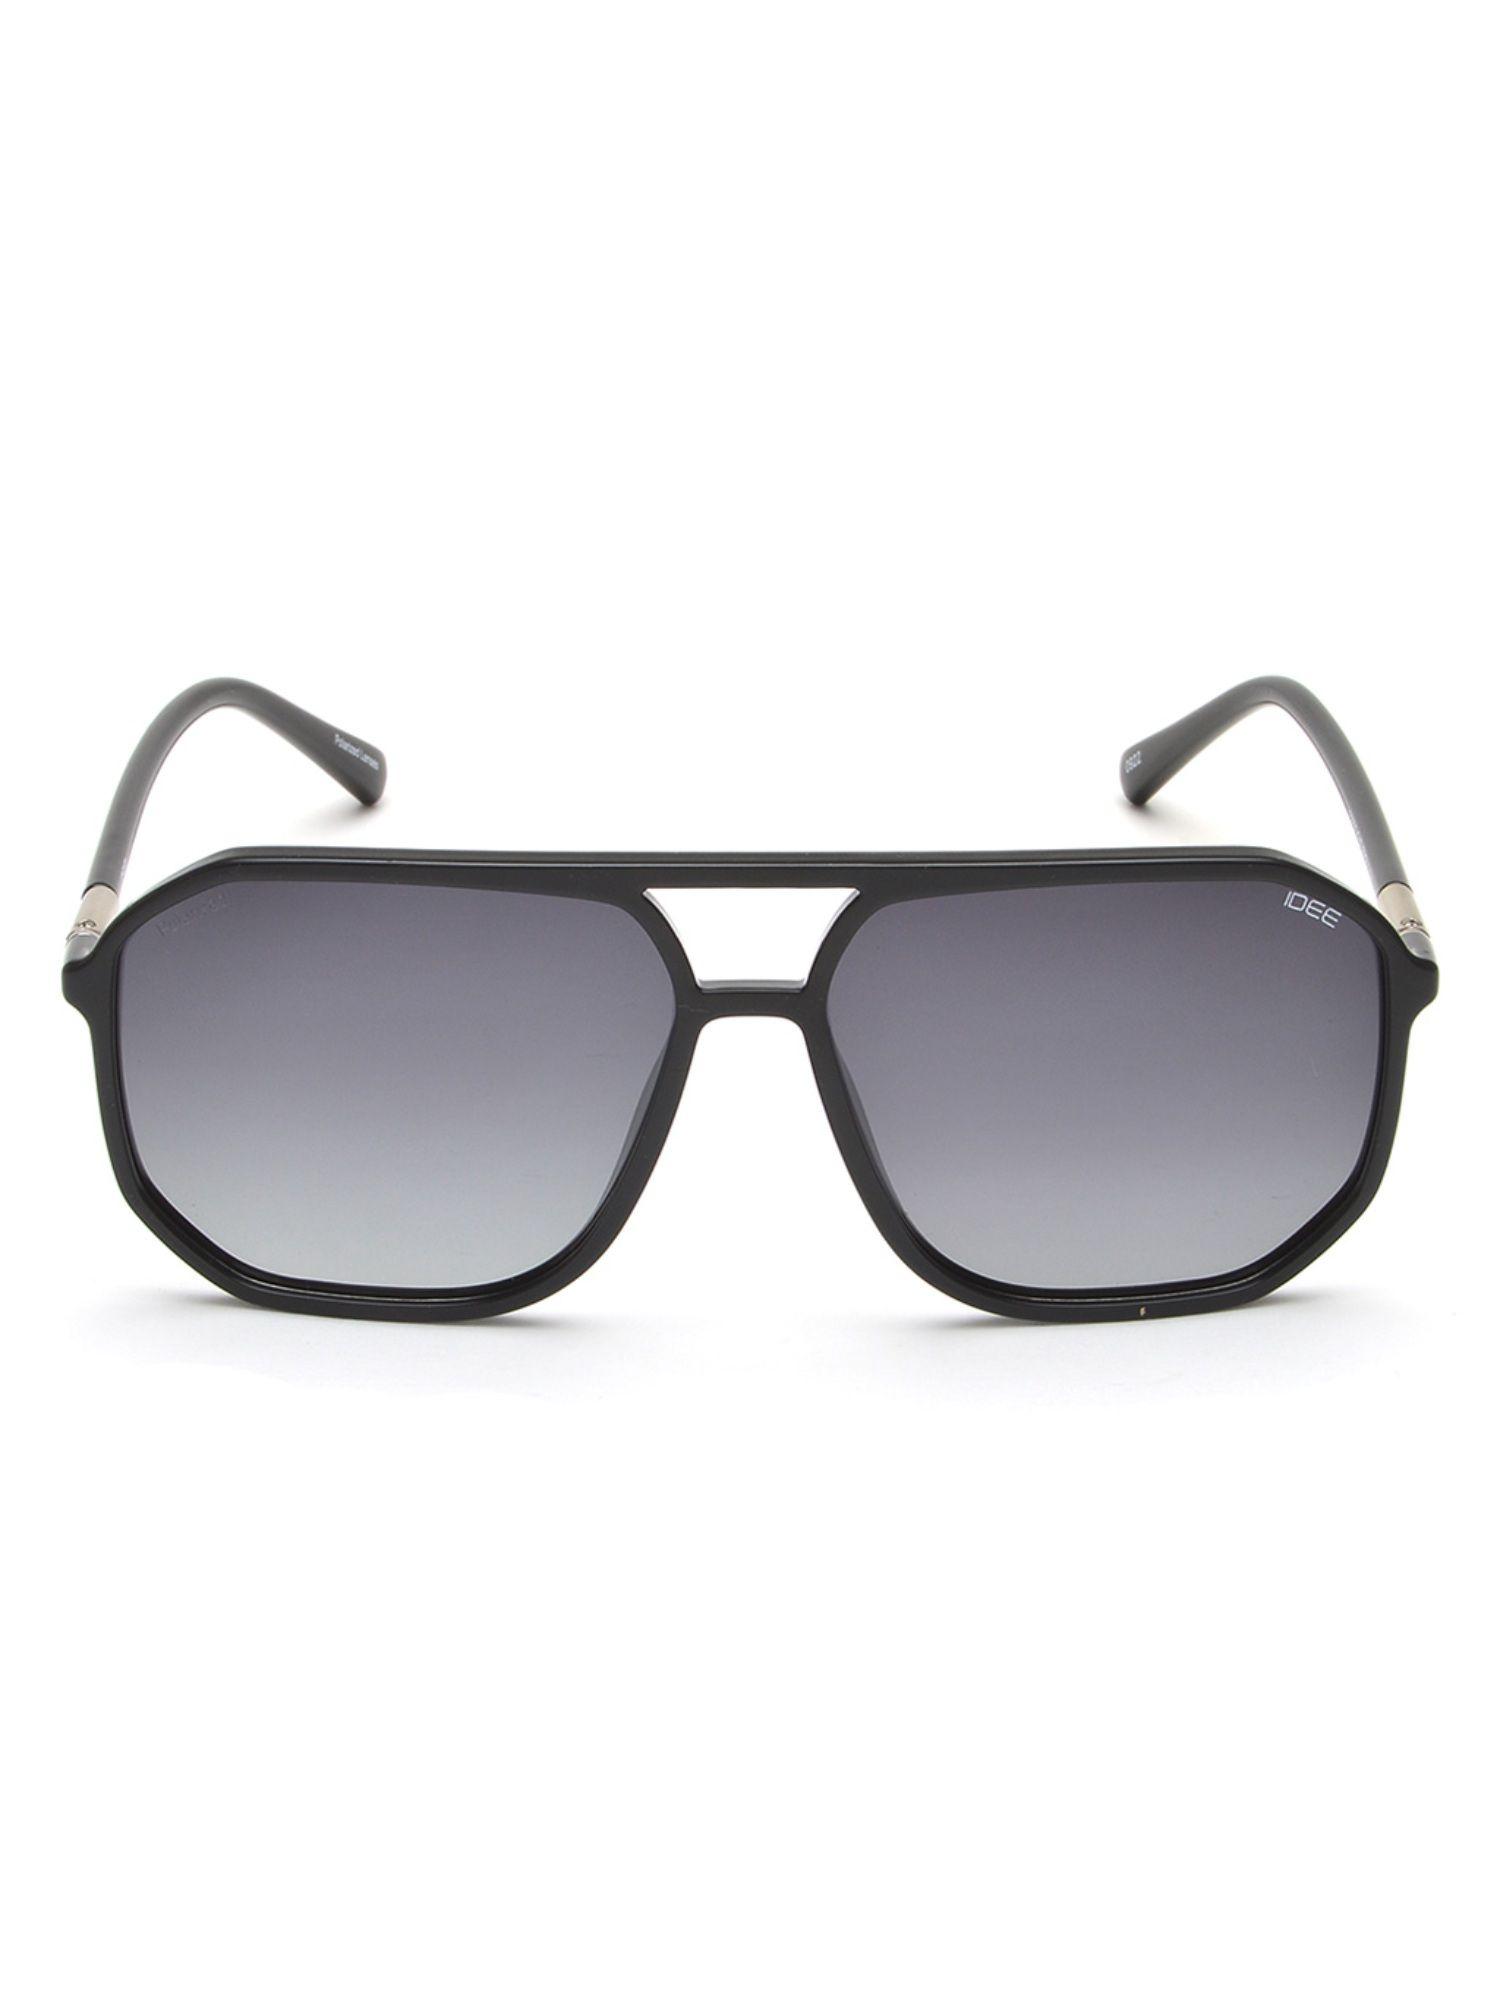 s2925 c1p 59 grey lens sunglasses for men (59)